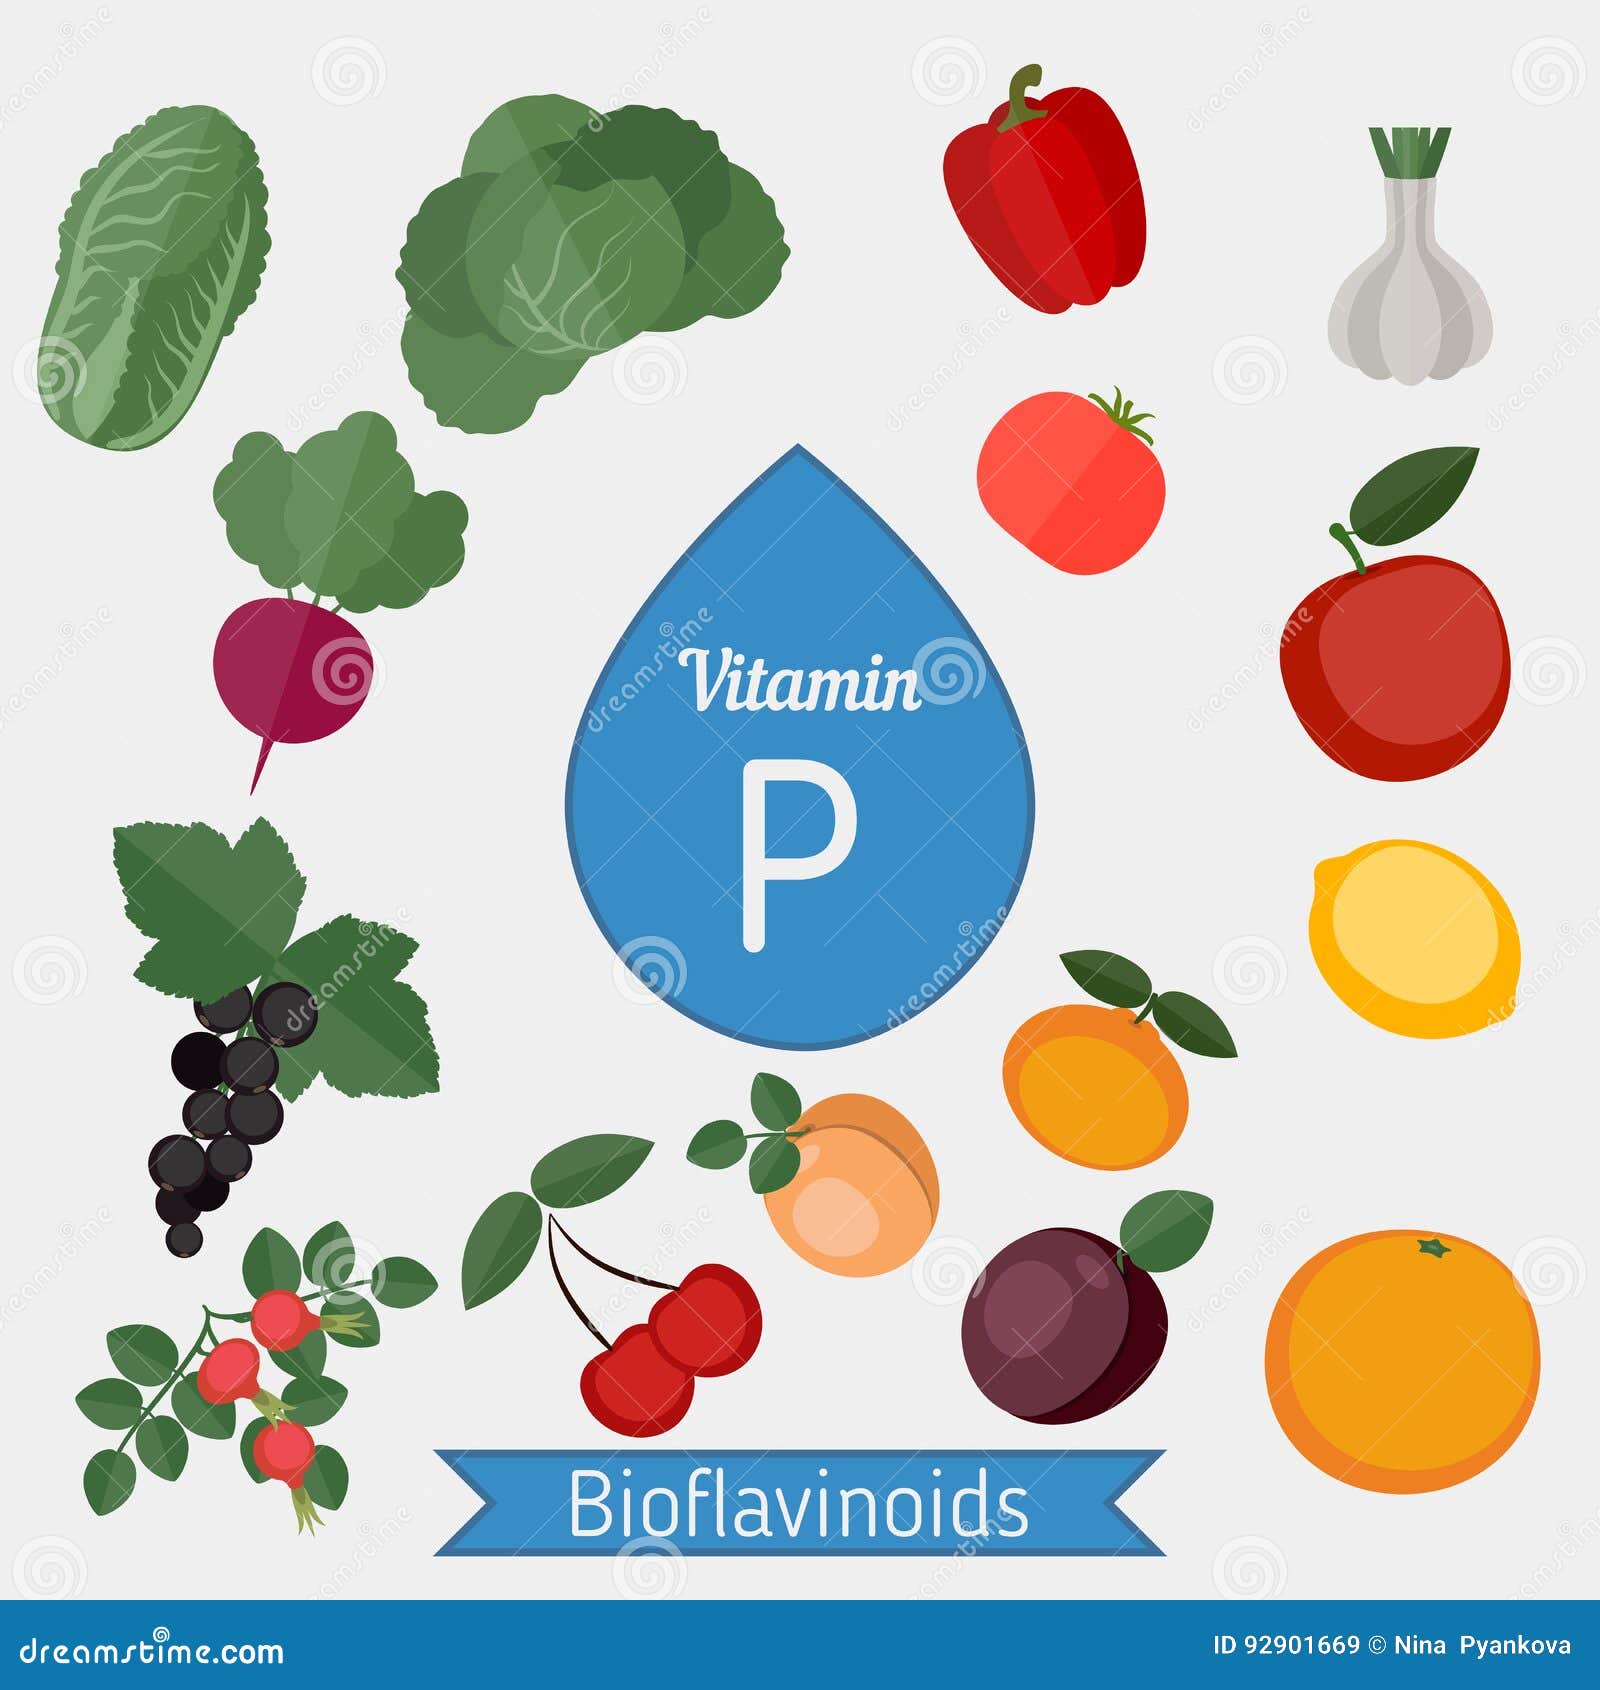 P vitamin. Витамин p. Витамины вектор. Витамин p биофлавоноиды. Витамины инфографика.